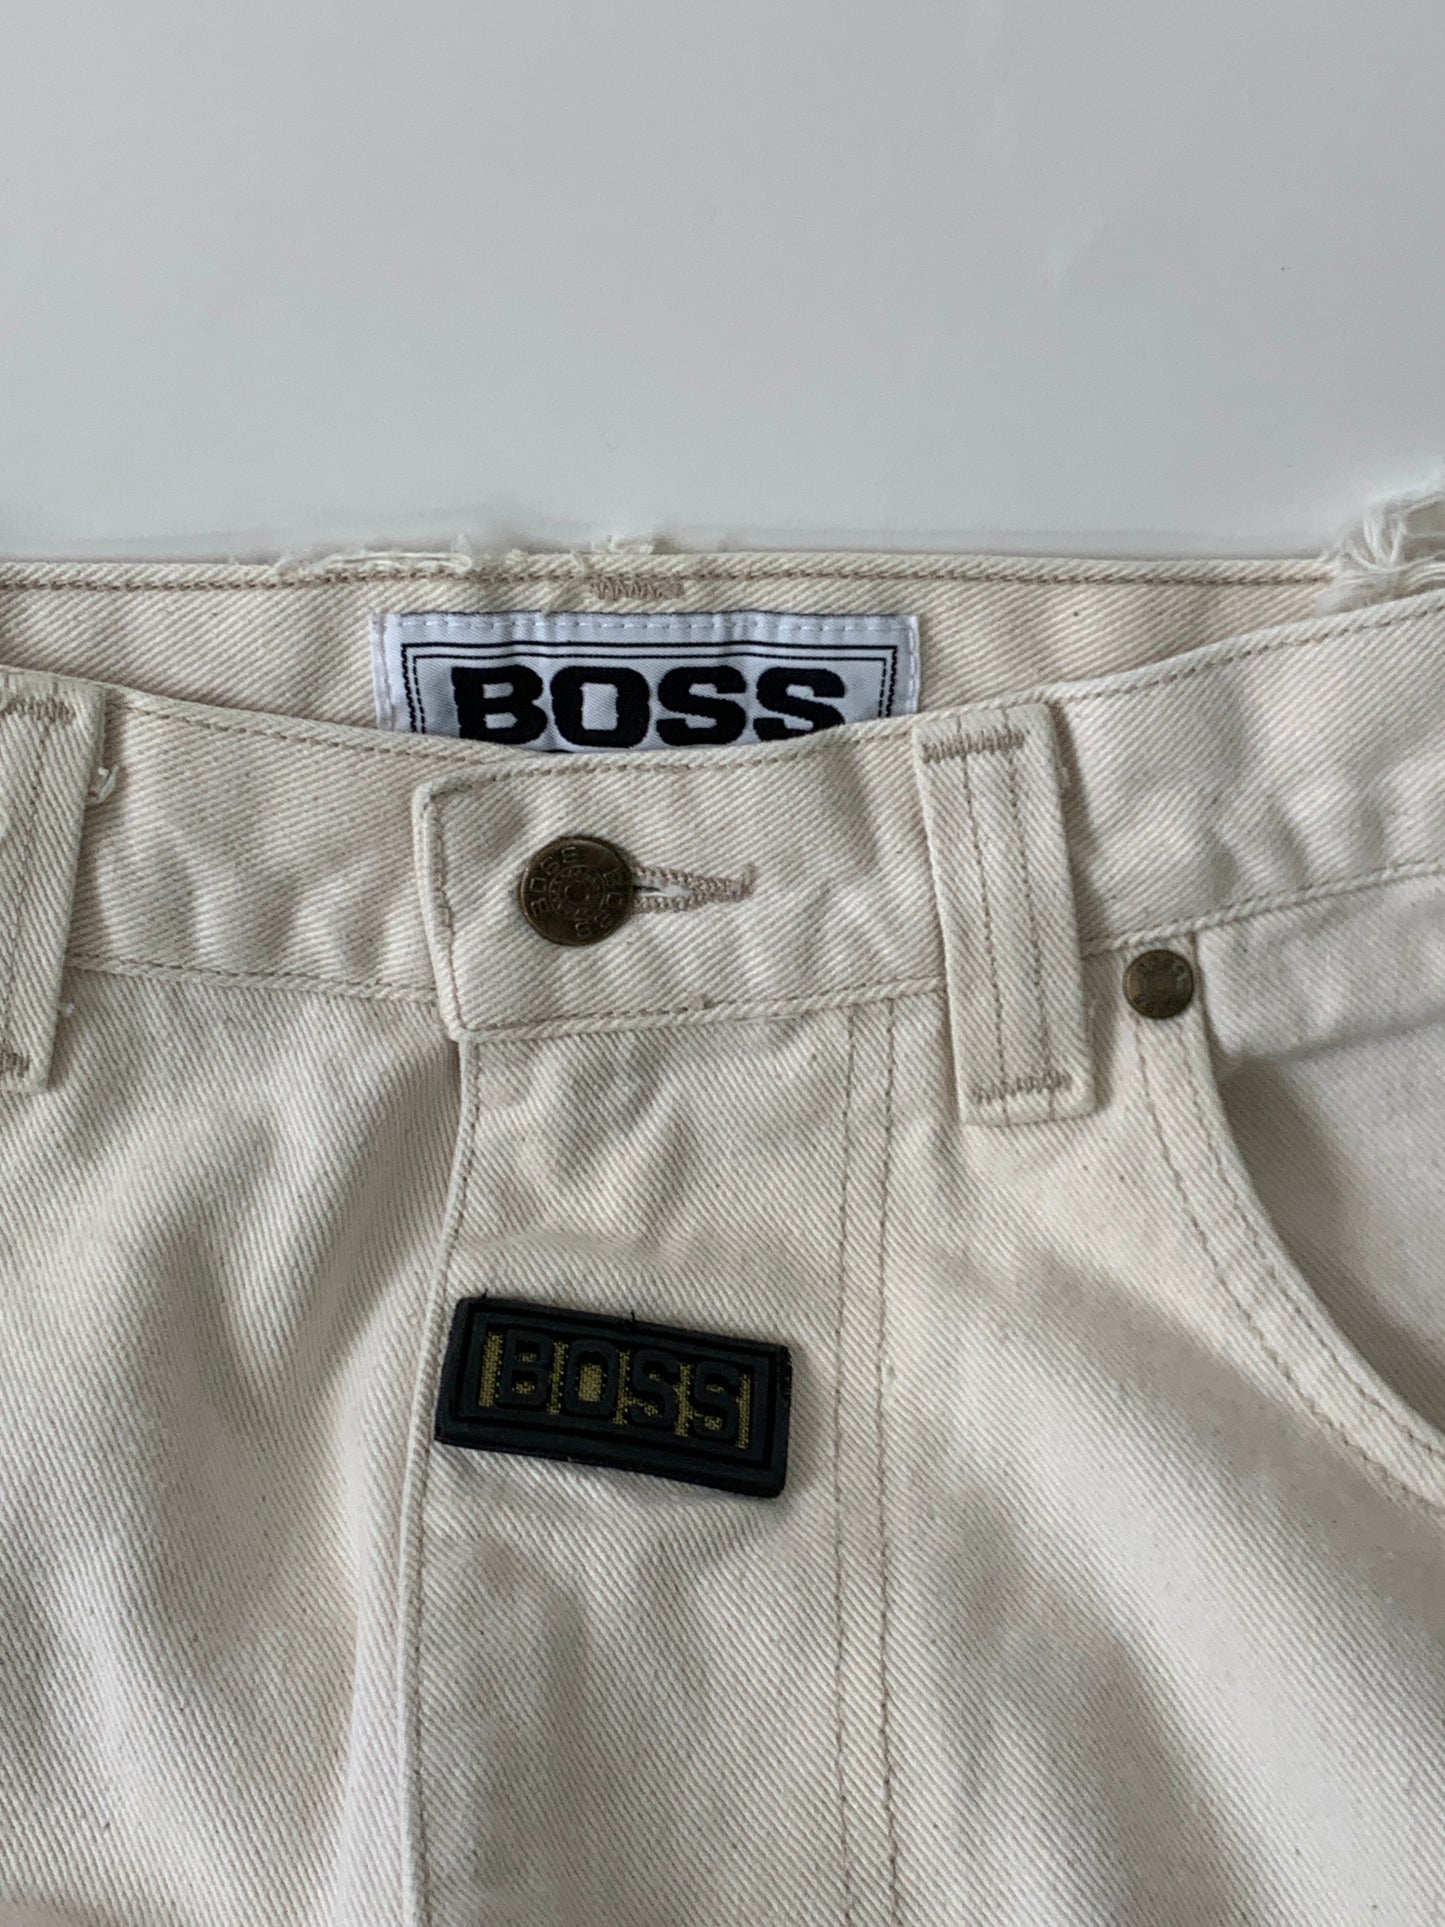 BOSS Vintage Baggy Bone Jeans - 34 x 32